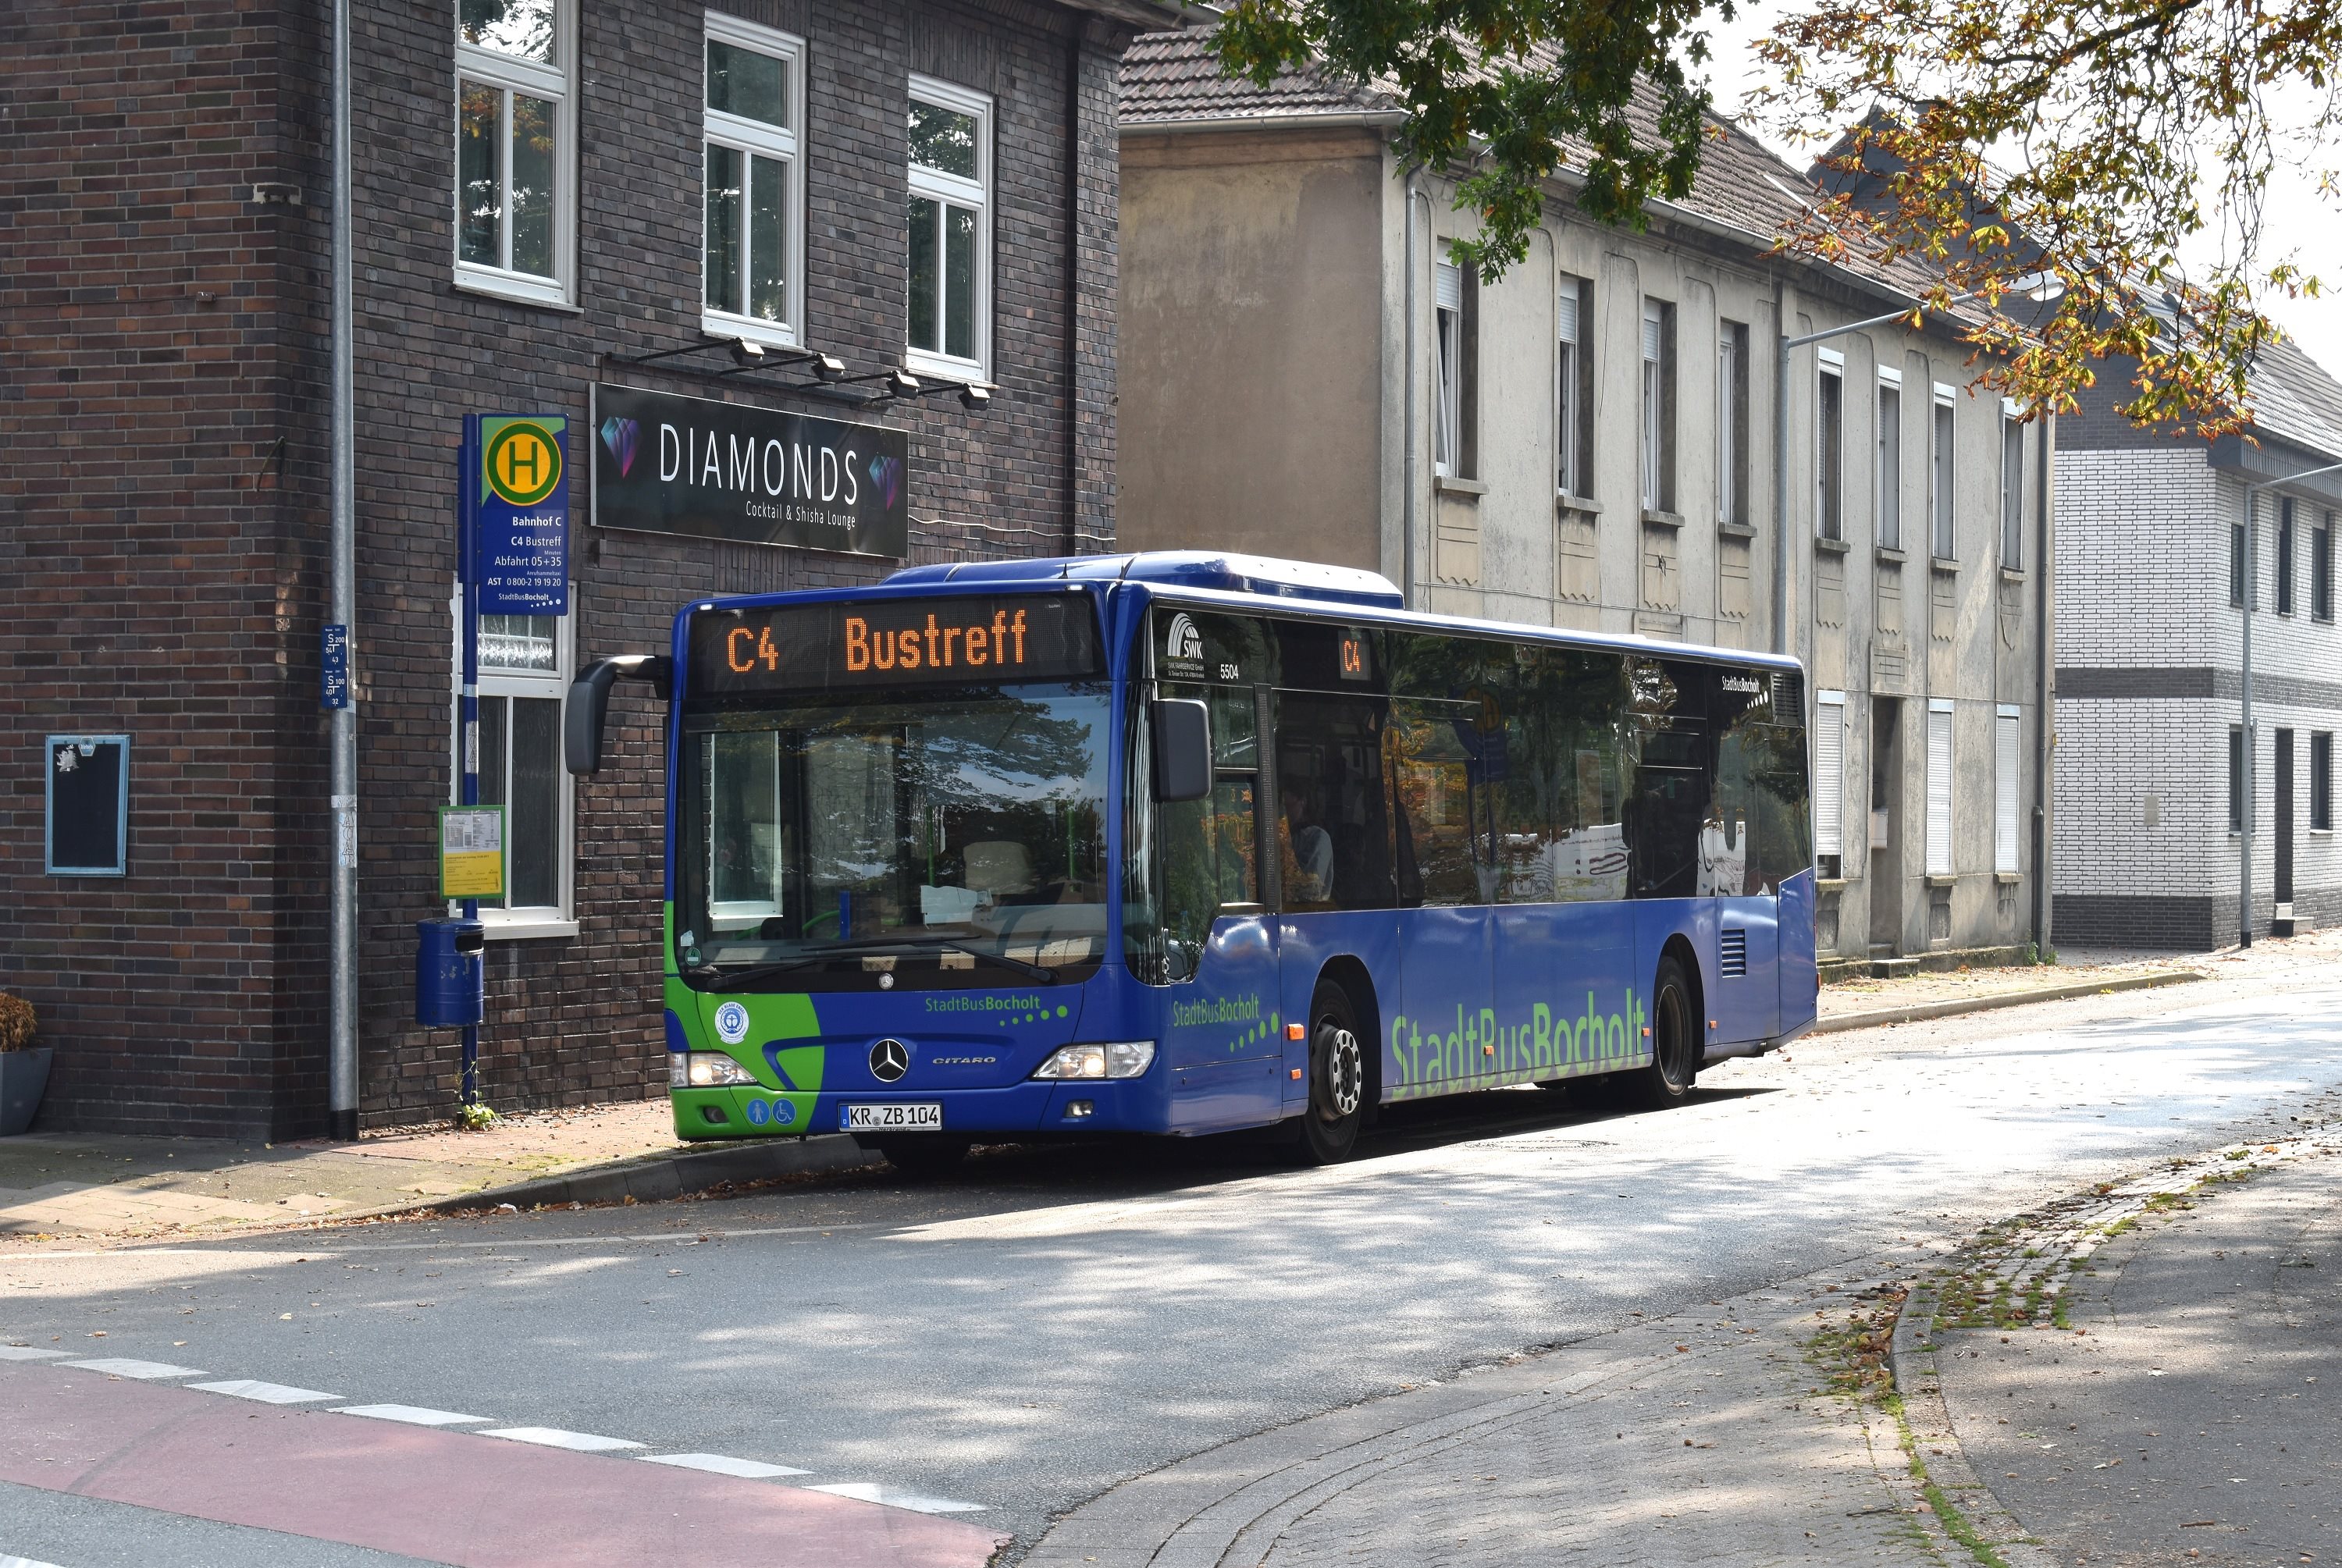 C4 Bocholt-Bustreff Bocholt-Bahnhof